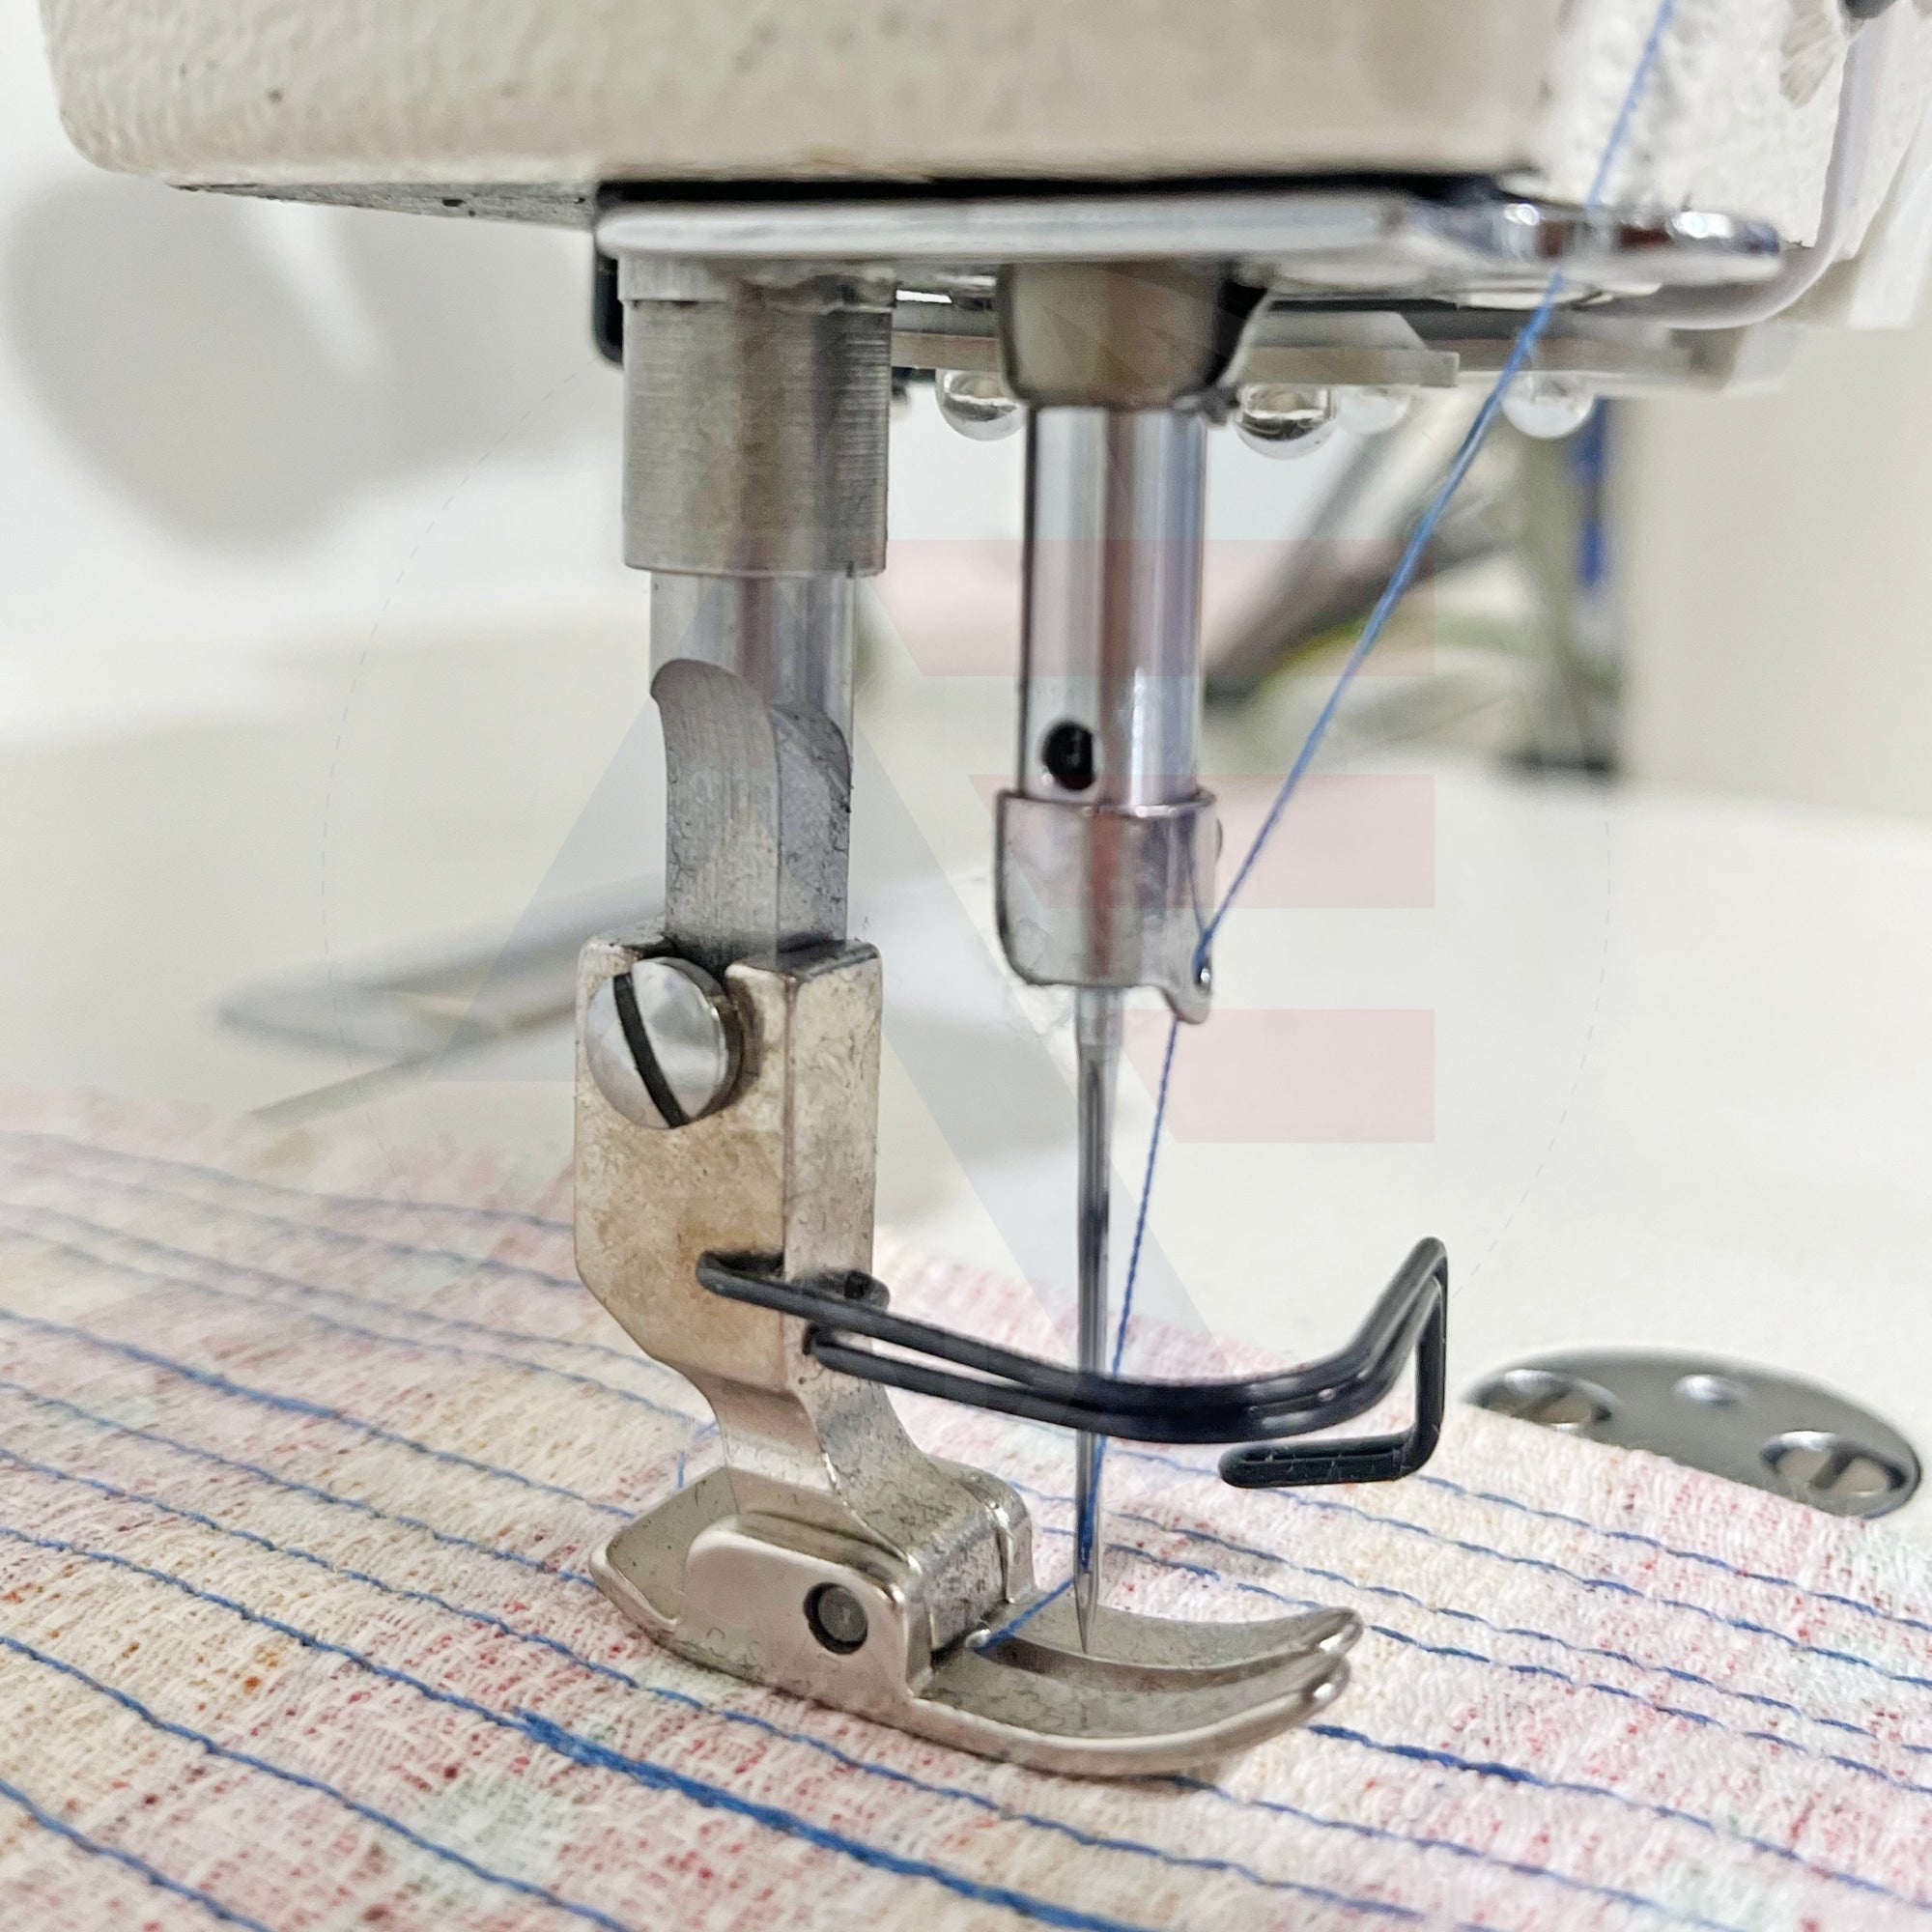 Global Nf 3901 Series Needle-Feed Lockstitch Machine Sewing Machines